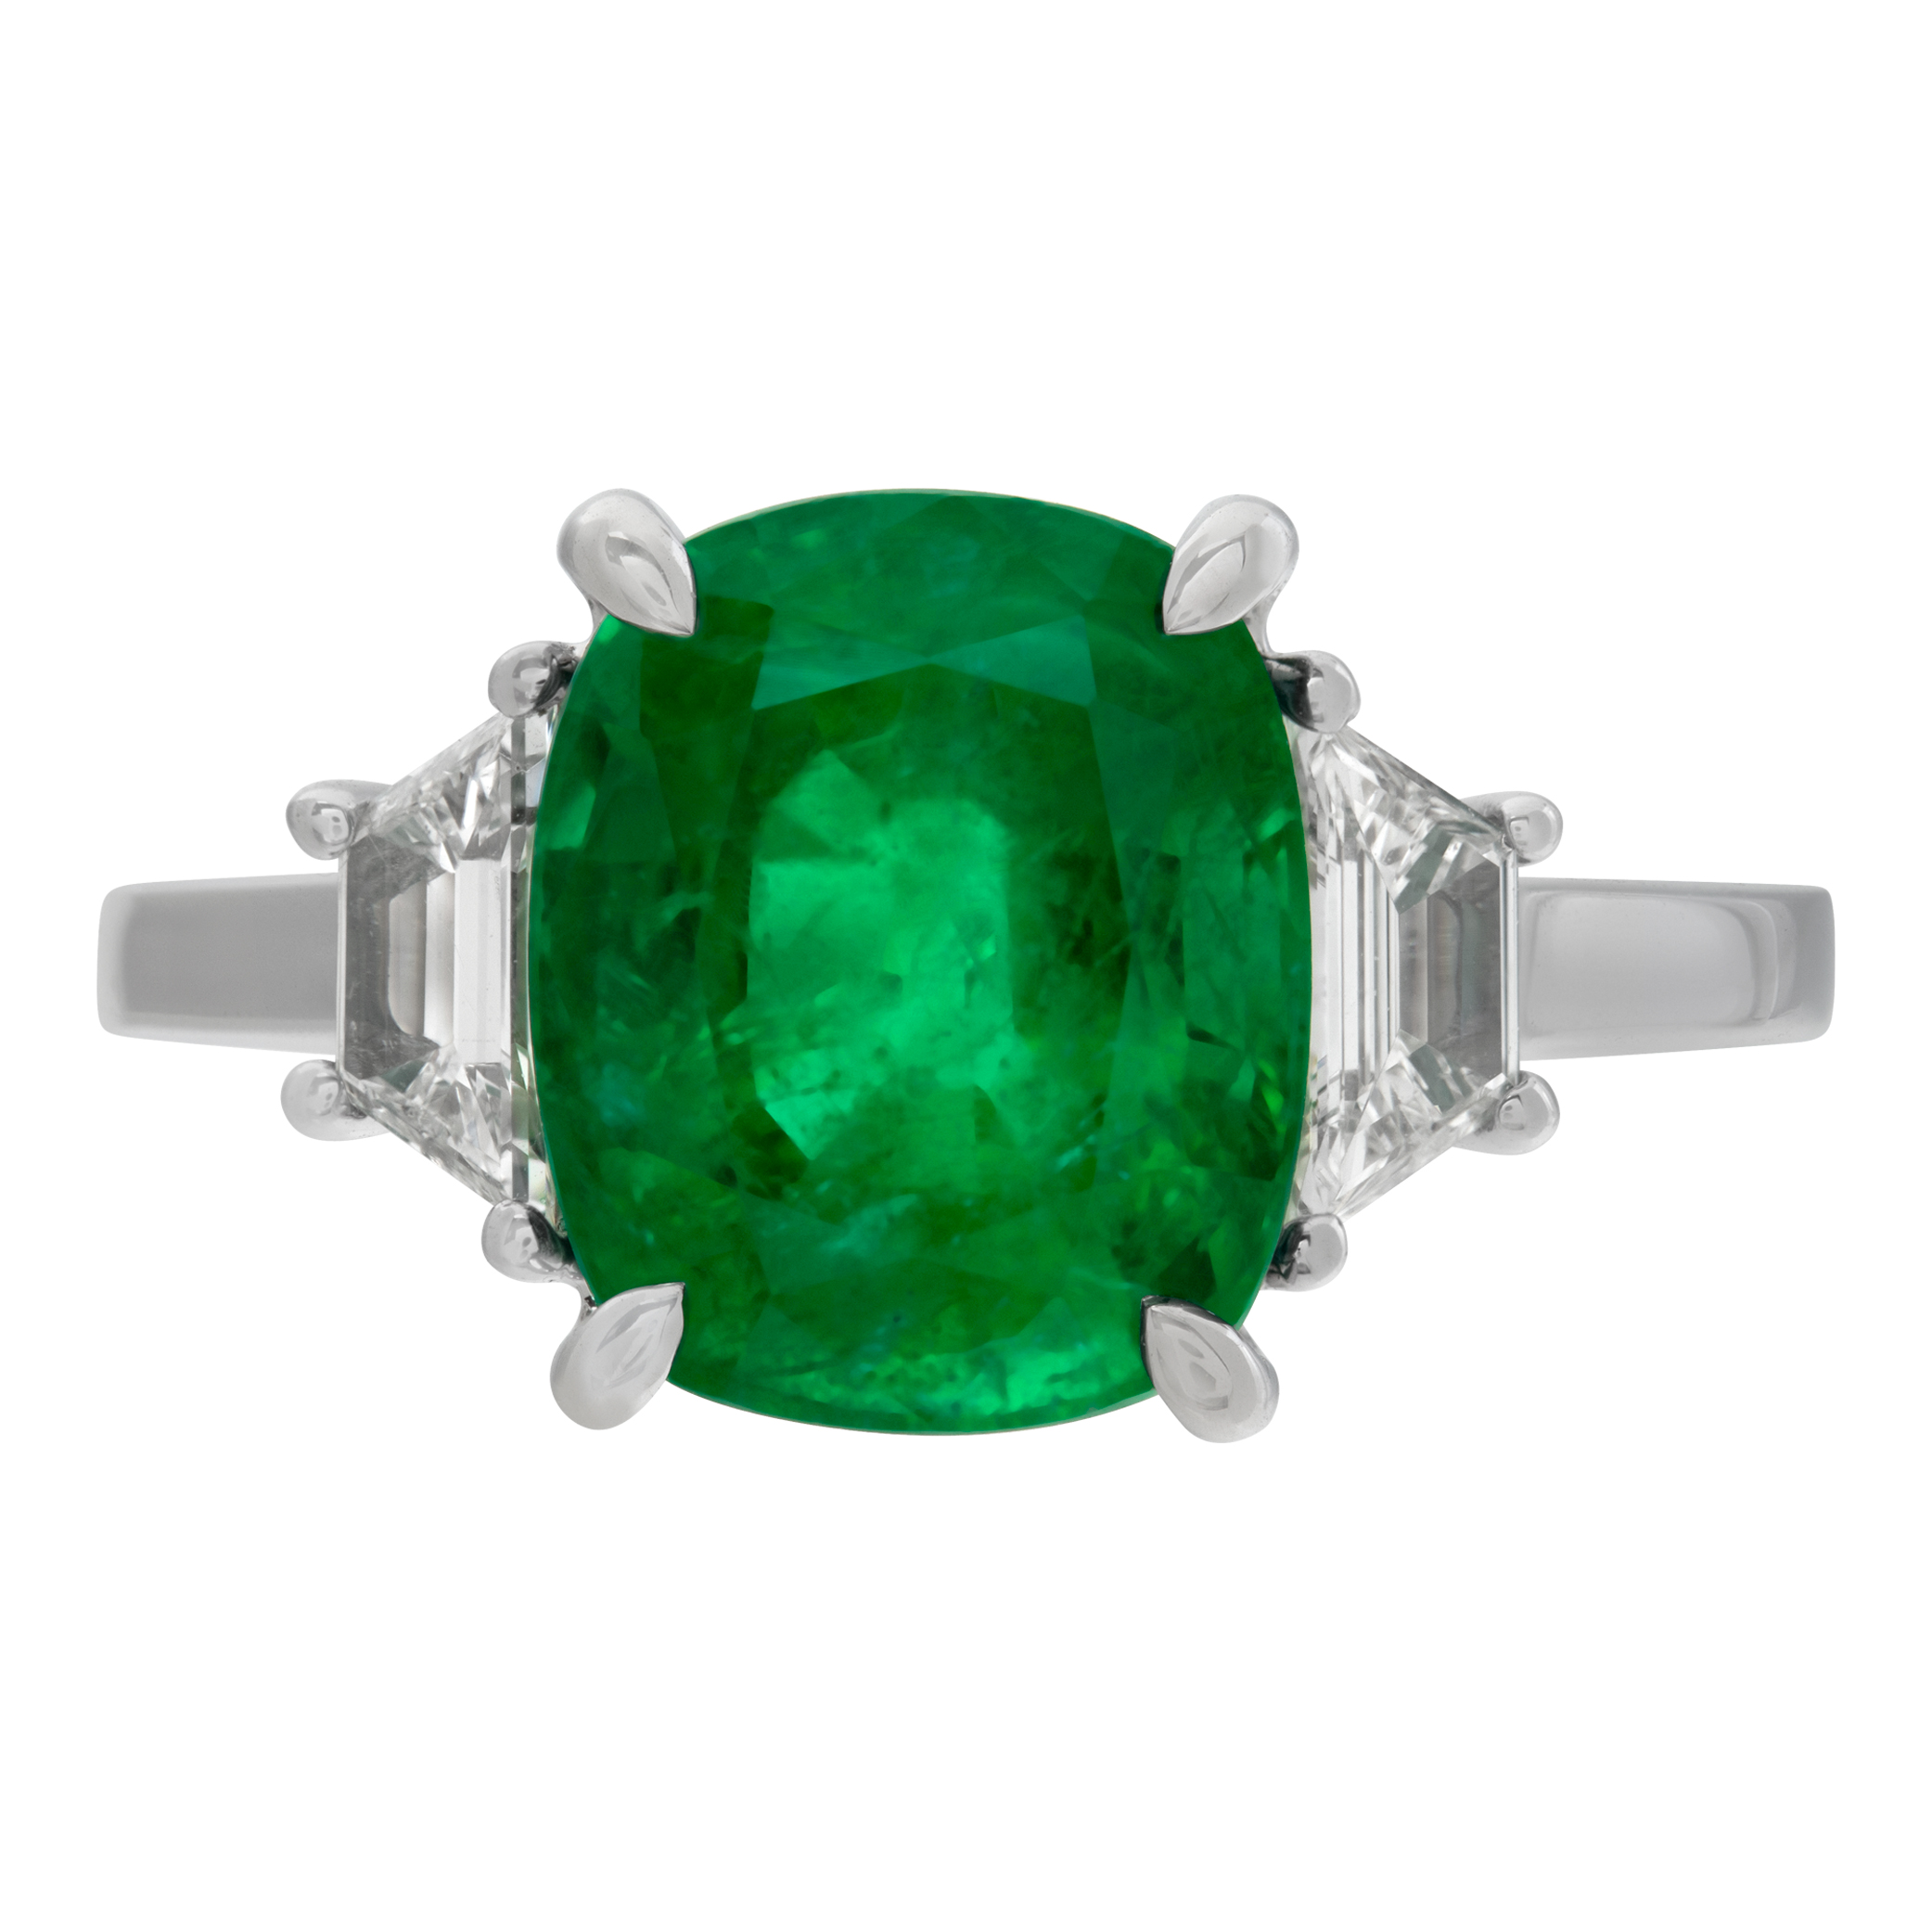 GIA certified 4.11 carat natural beryl cushion cut emerald ring image 2